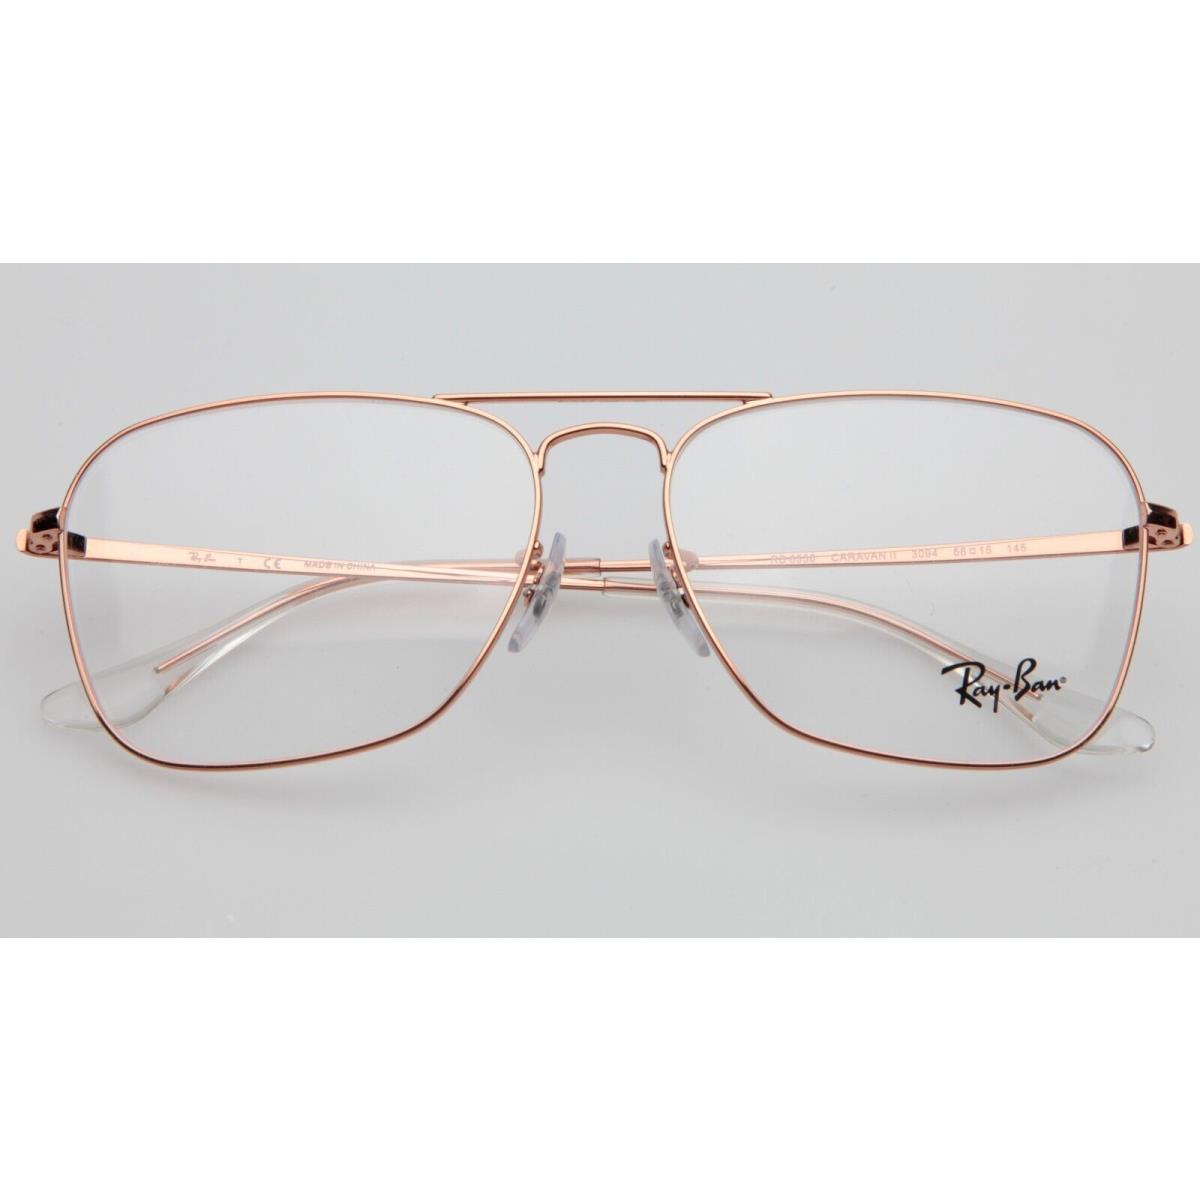 Ray-Ban eyeglasses CARAVAN - Rose Gold Frame 5